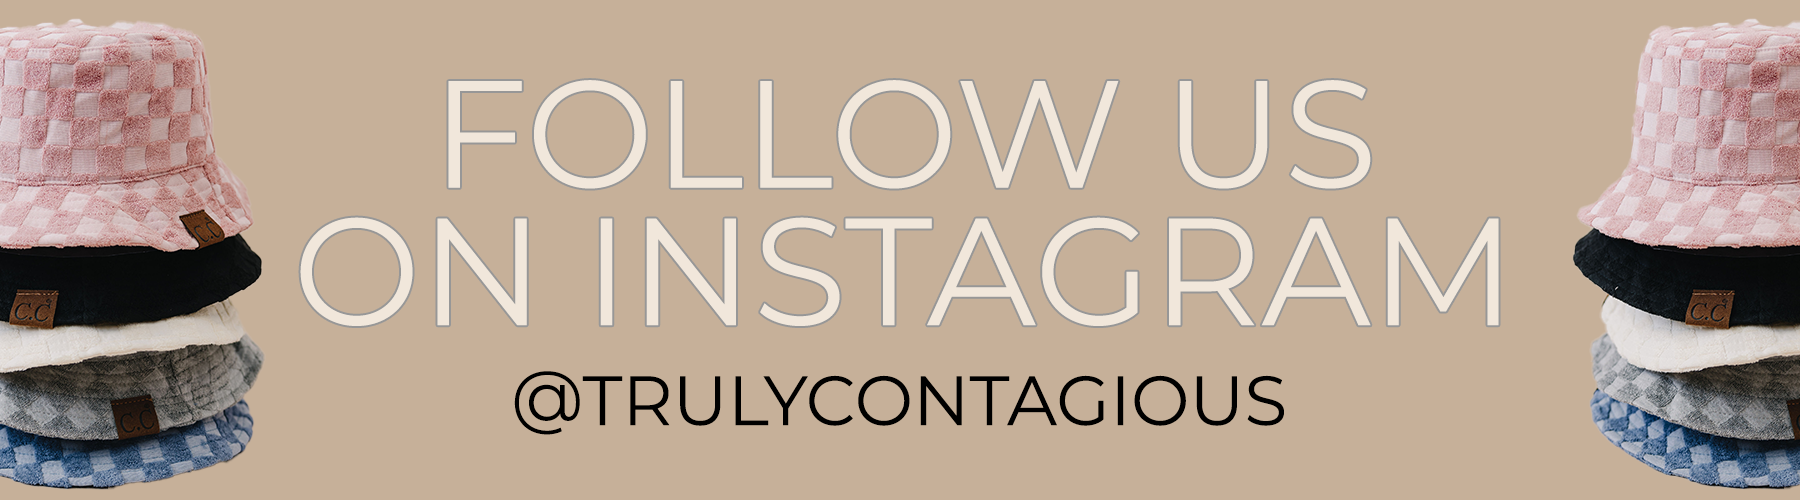 Follow us on Instagram @trulycontagious 